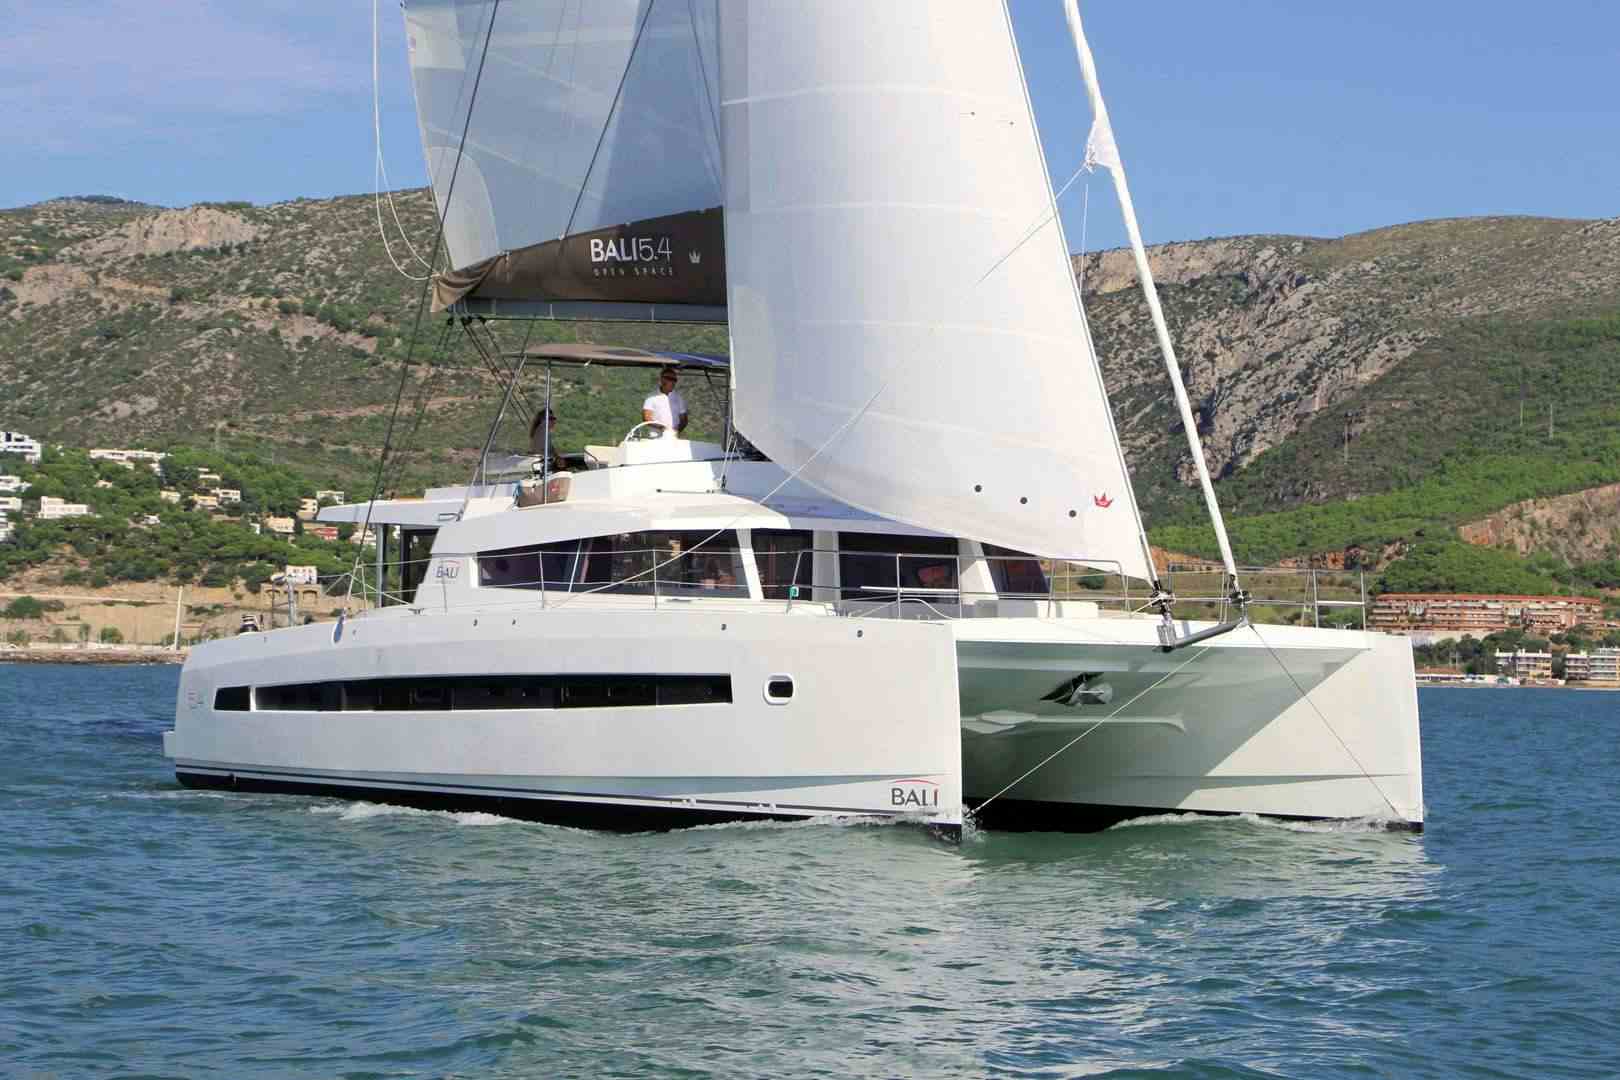 TWO OCEANS - Yacht Charter Denia & Boat hire in W. Med - Spain/Balearics, Caribbean Leewards, Caribbean Windwards, Caribbean Virgin Islands (BVI) 1